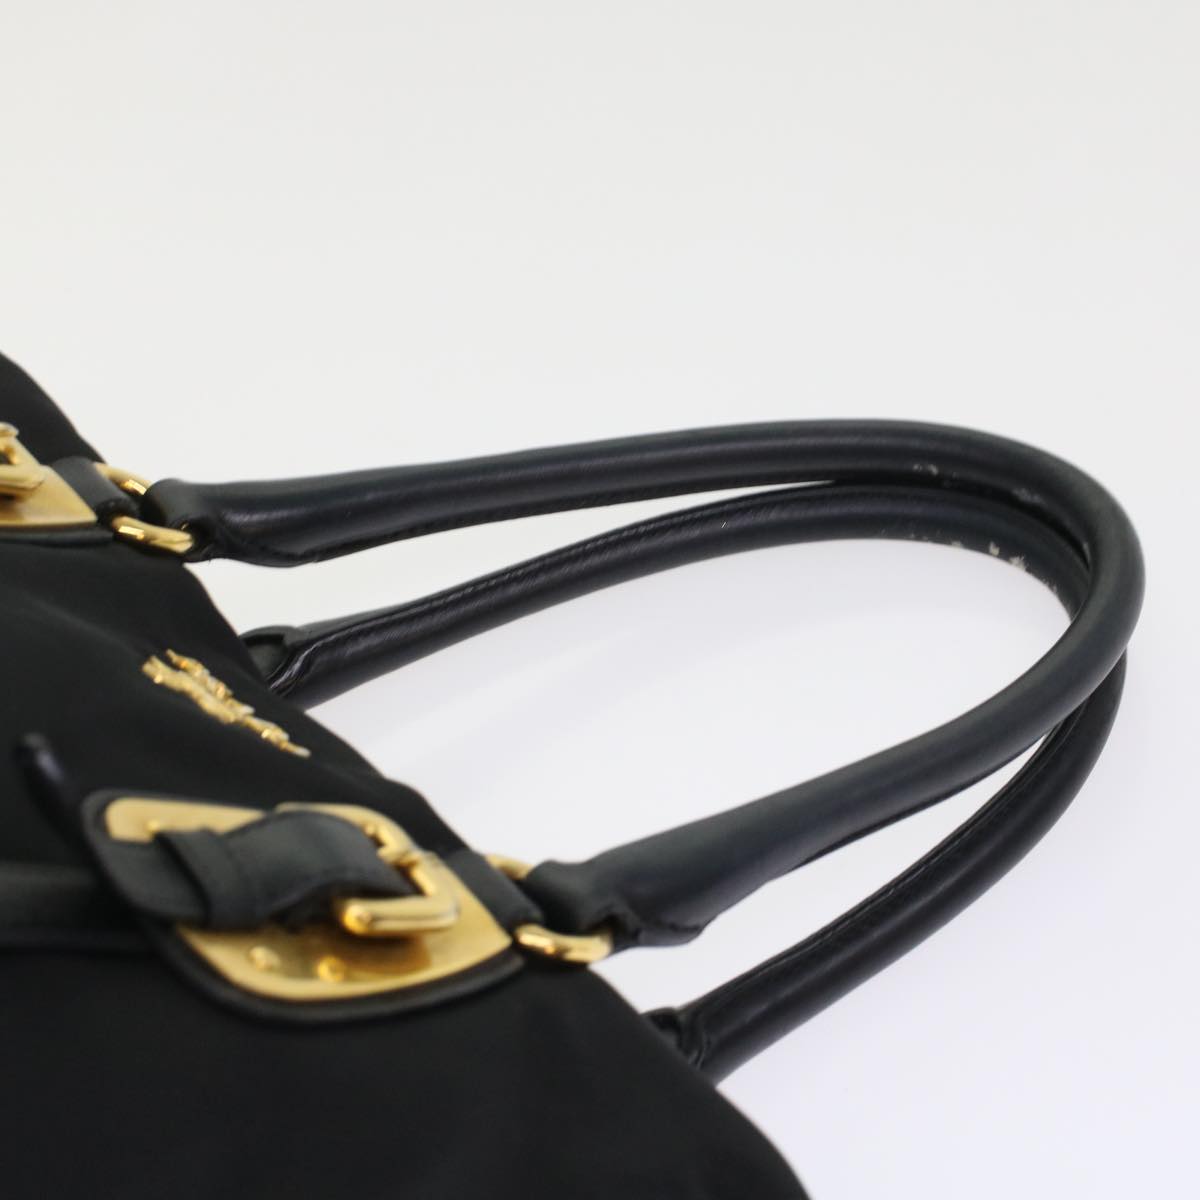 PRADA PRADA Sports Hand Bag Nylon Leather 2way Black Auth am4816